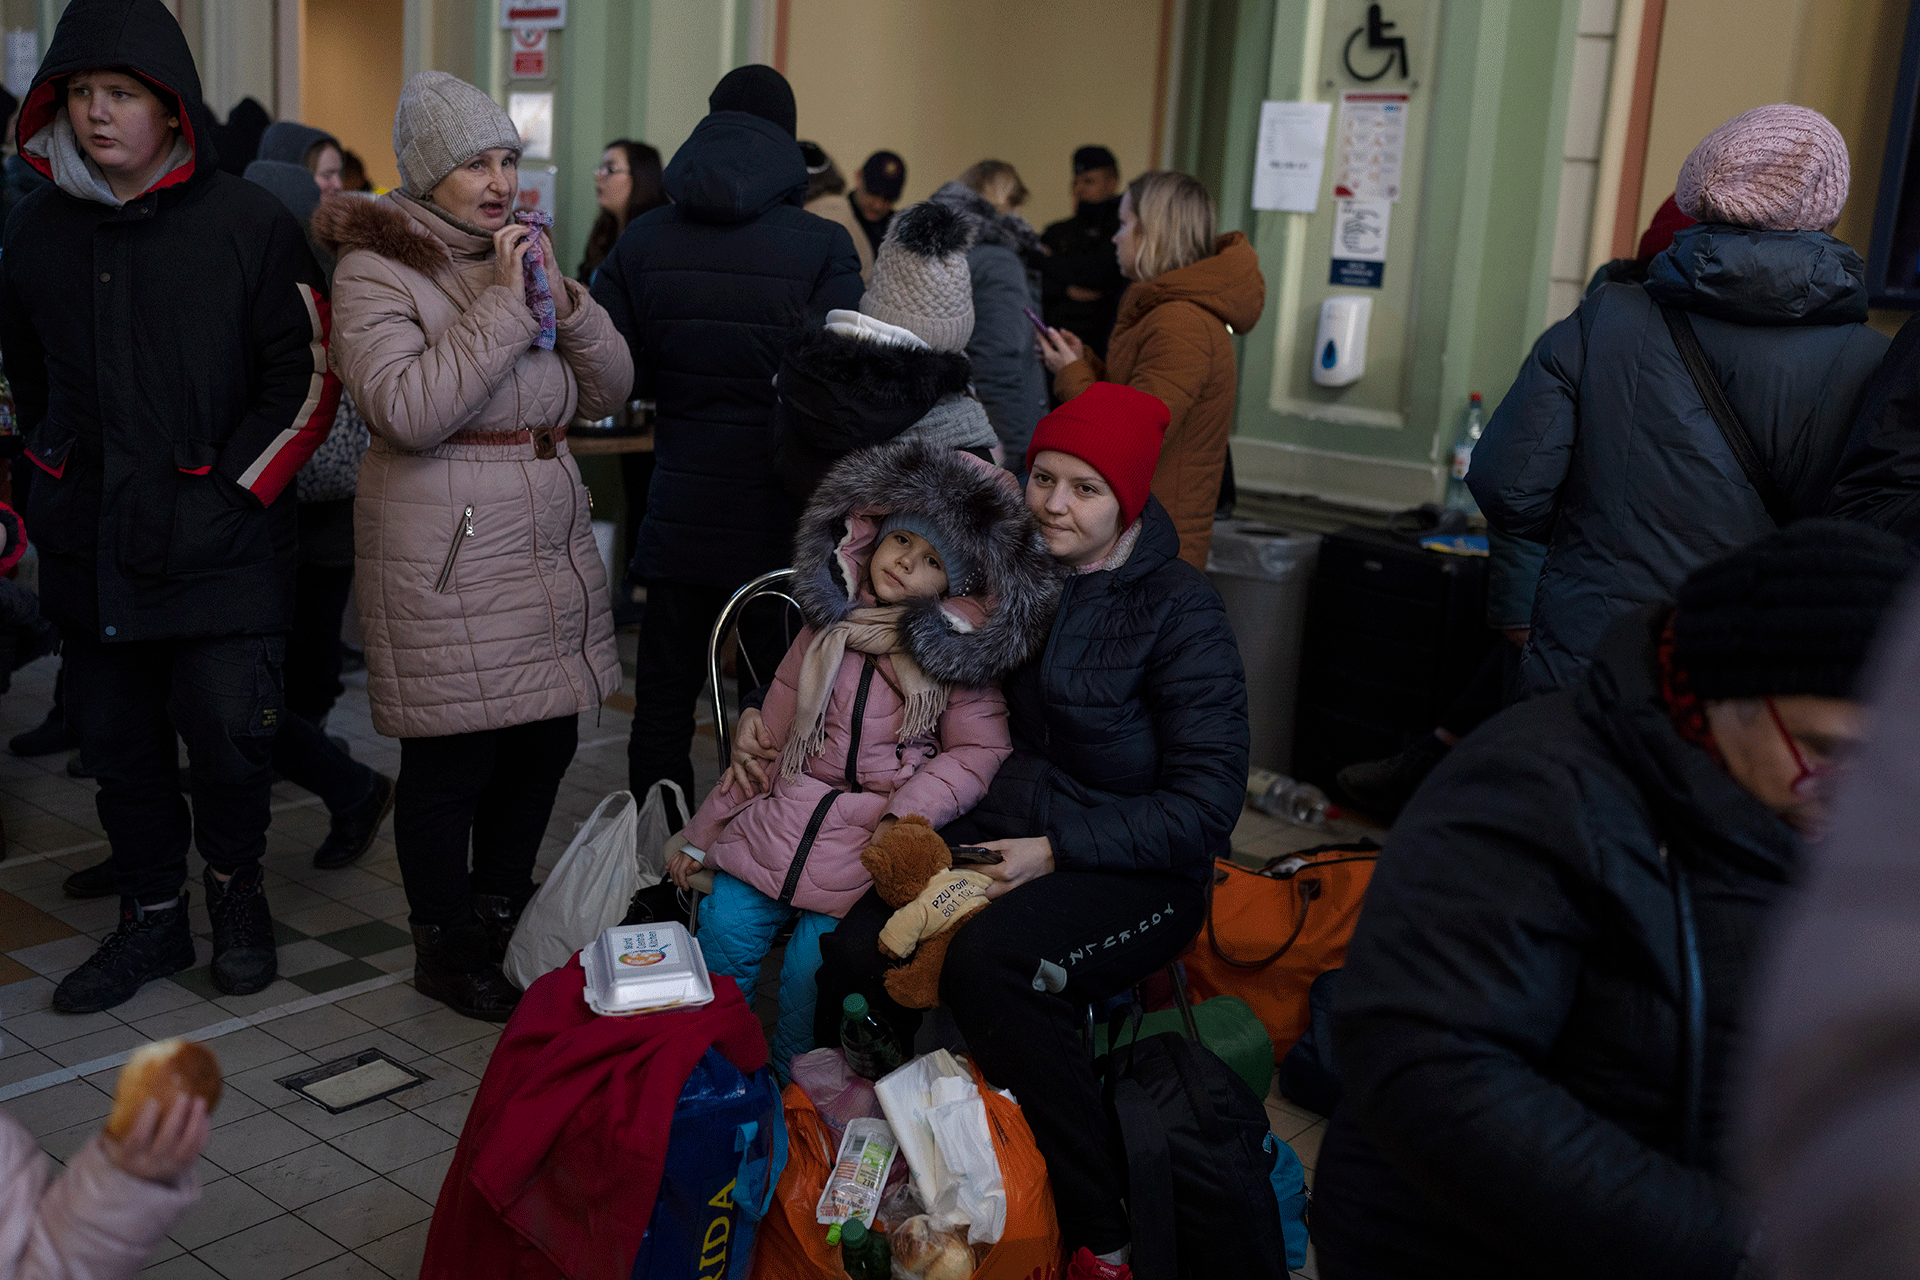 Ukrainian refugees wait at Przymysl train station.